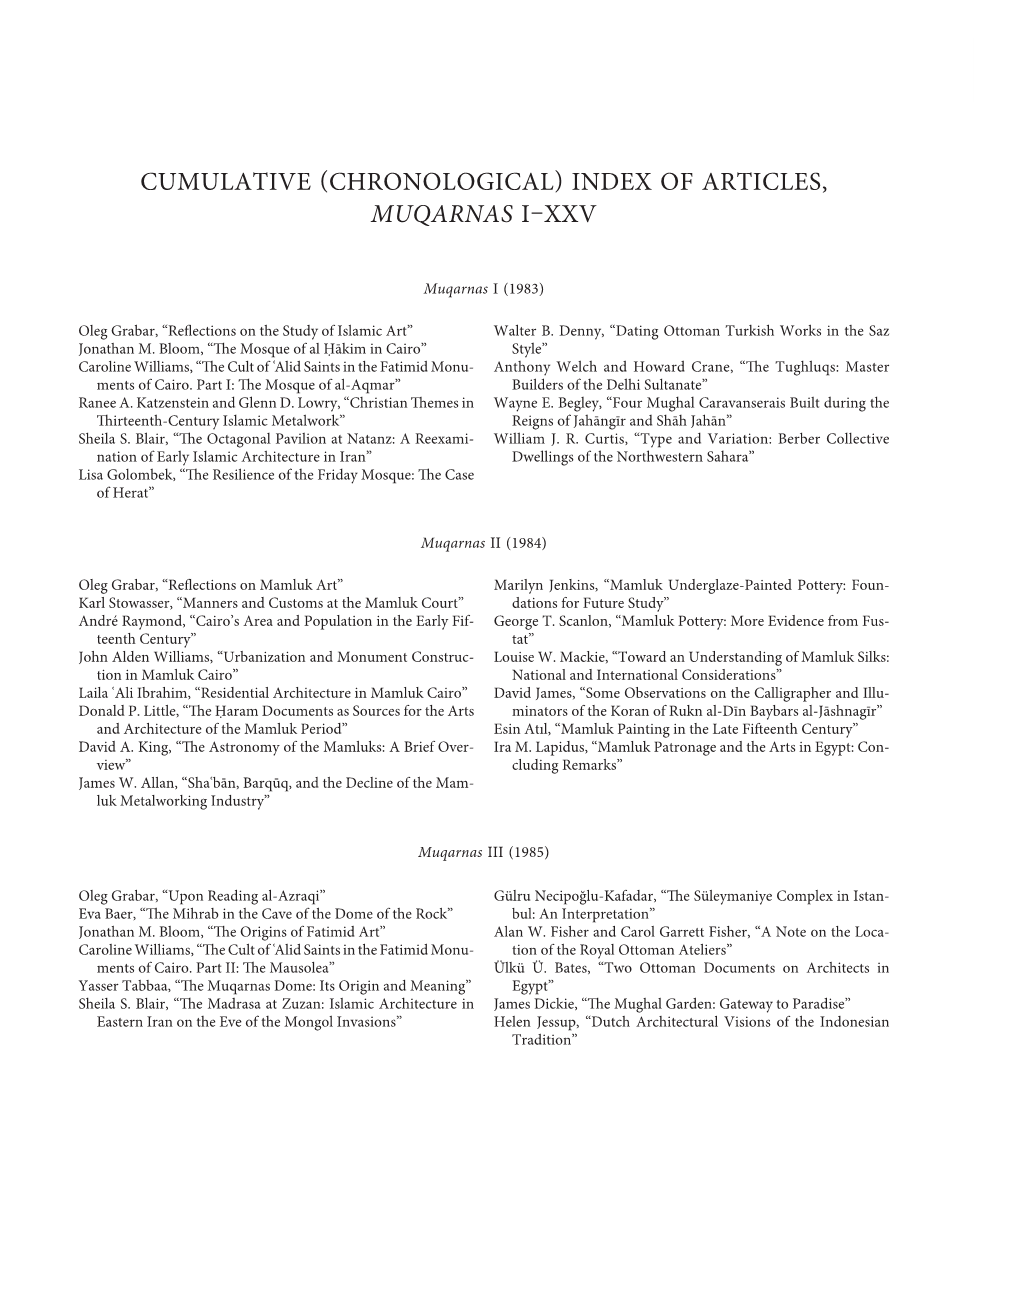 Cumulative Chronological Index of Articles, Muqarnas